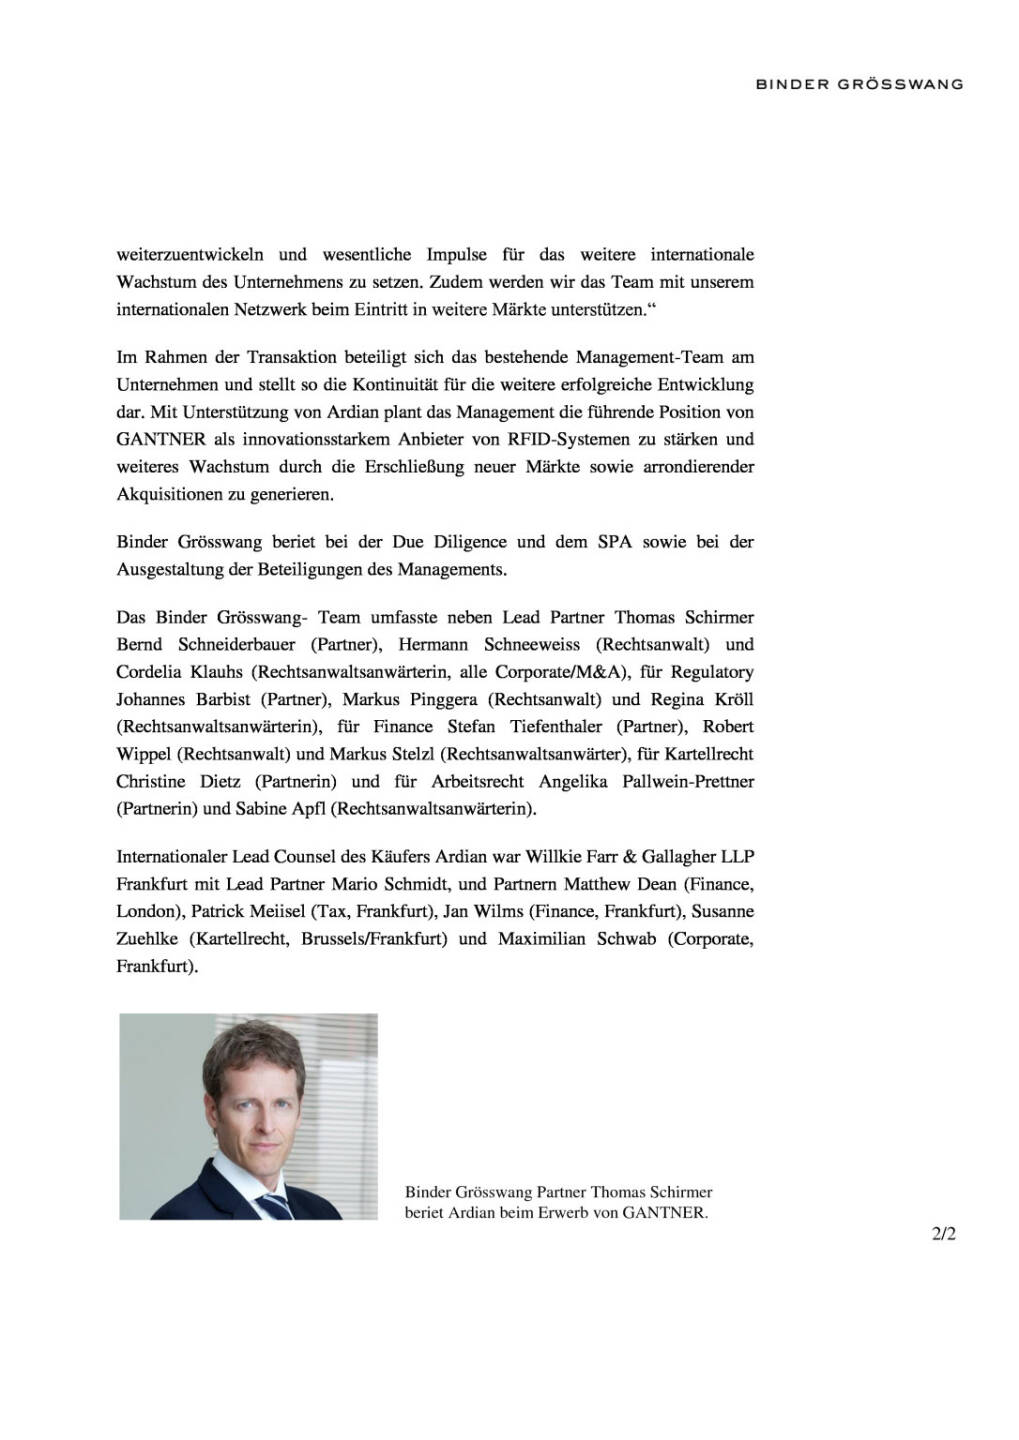 Binder Grösswang berät Ardian beim Erwerb der Gantner Holding, Seite 2/2, komplettes Dokument unter http://boerse-social.com/static/uploads/file_881_binder_grosswang_berat_ardian_beim_erwerb_der_gantner_holding.pdf